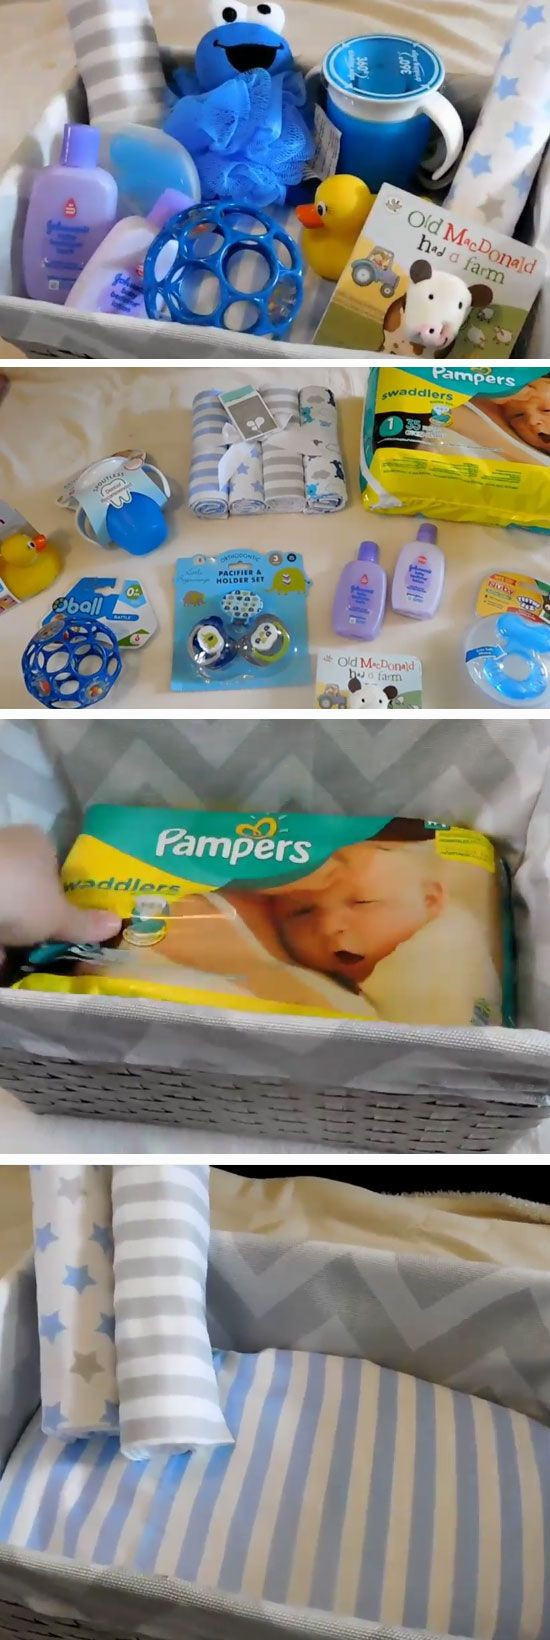 Baby Shower Gift Basket Ideas For Boy
 Best 25 Baby t baskets ideas on Pinterest